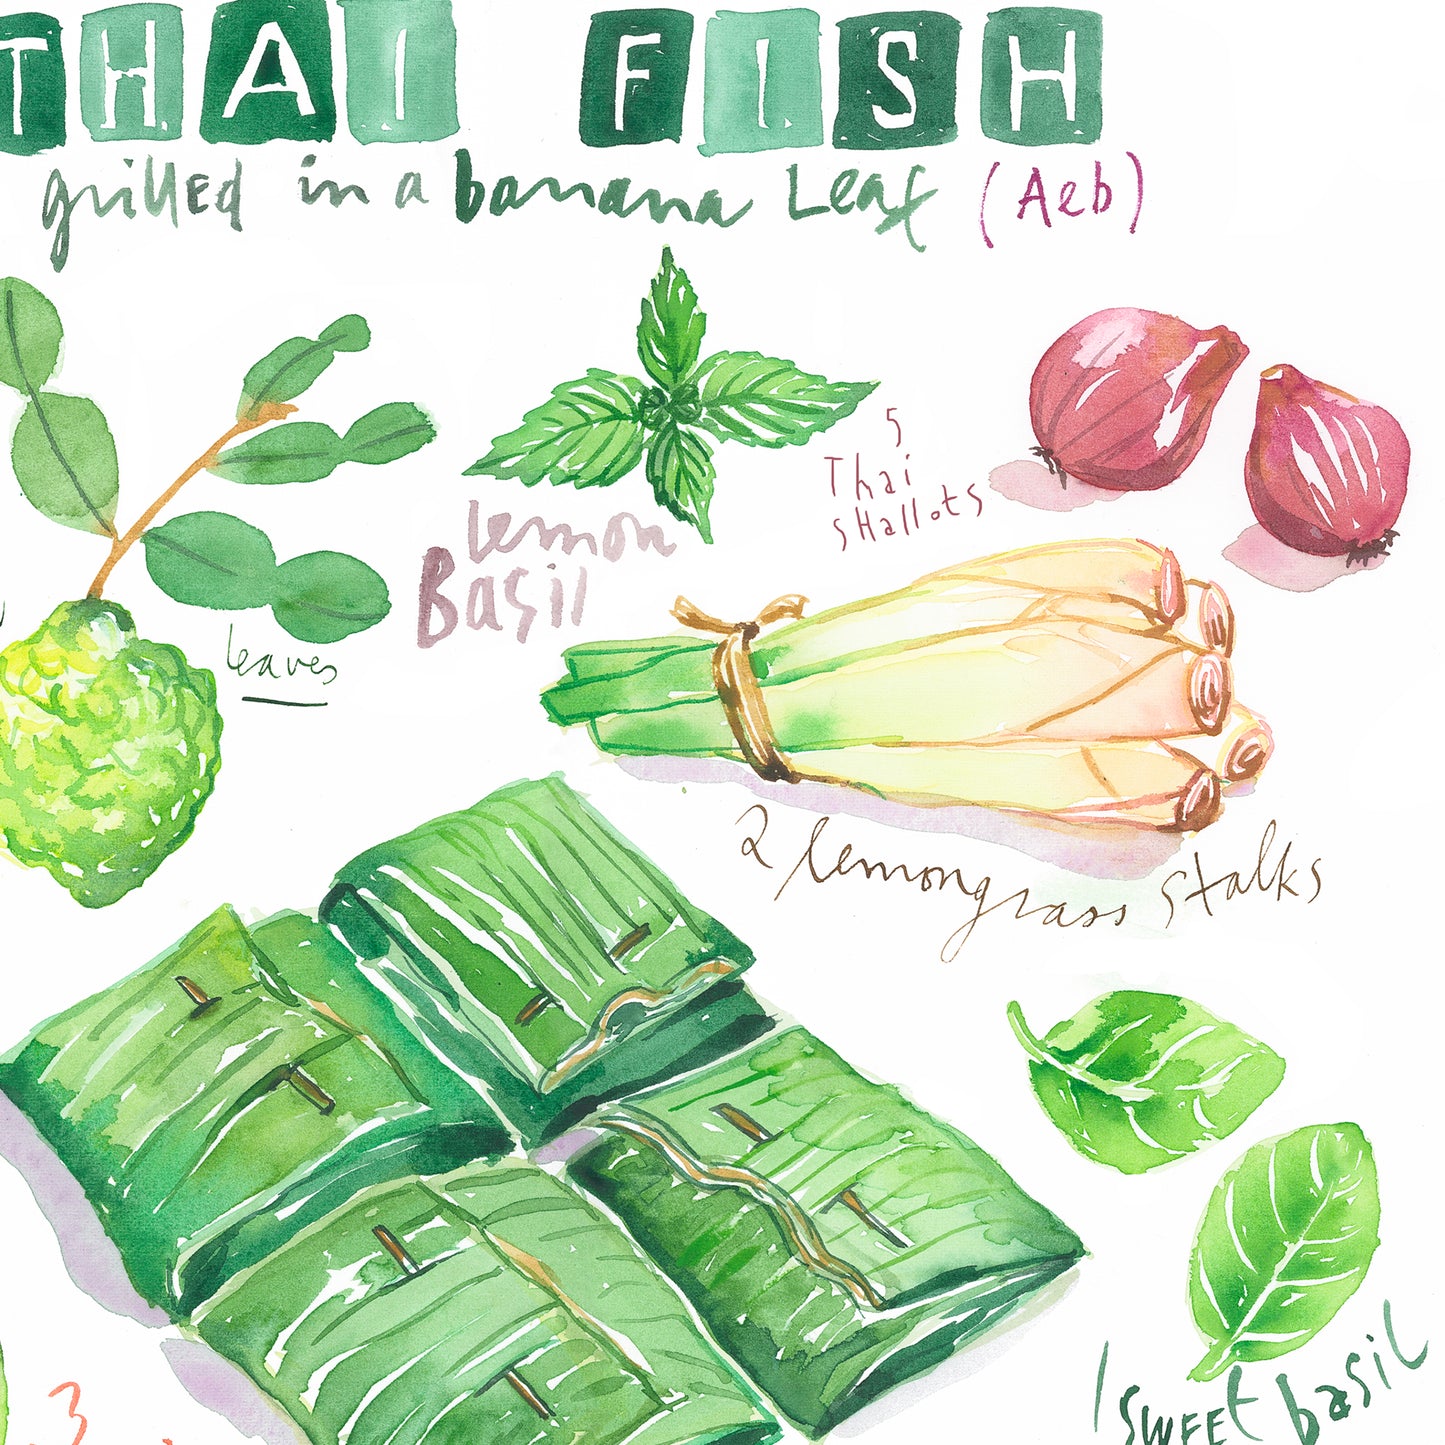 Thai fish grilled in banana leaf recipe